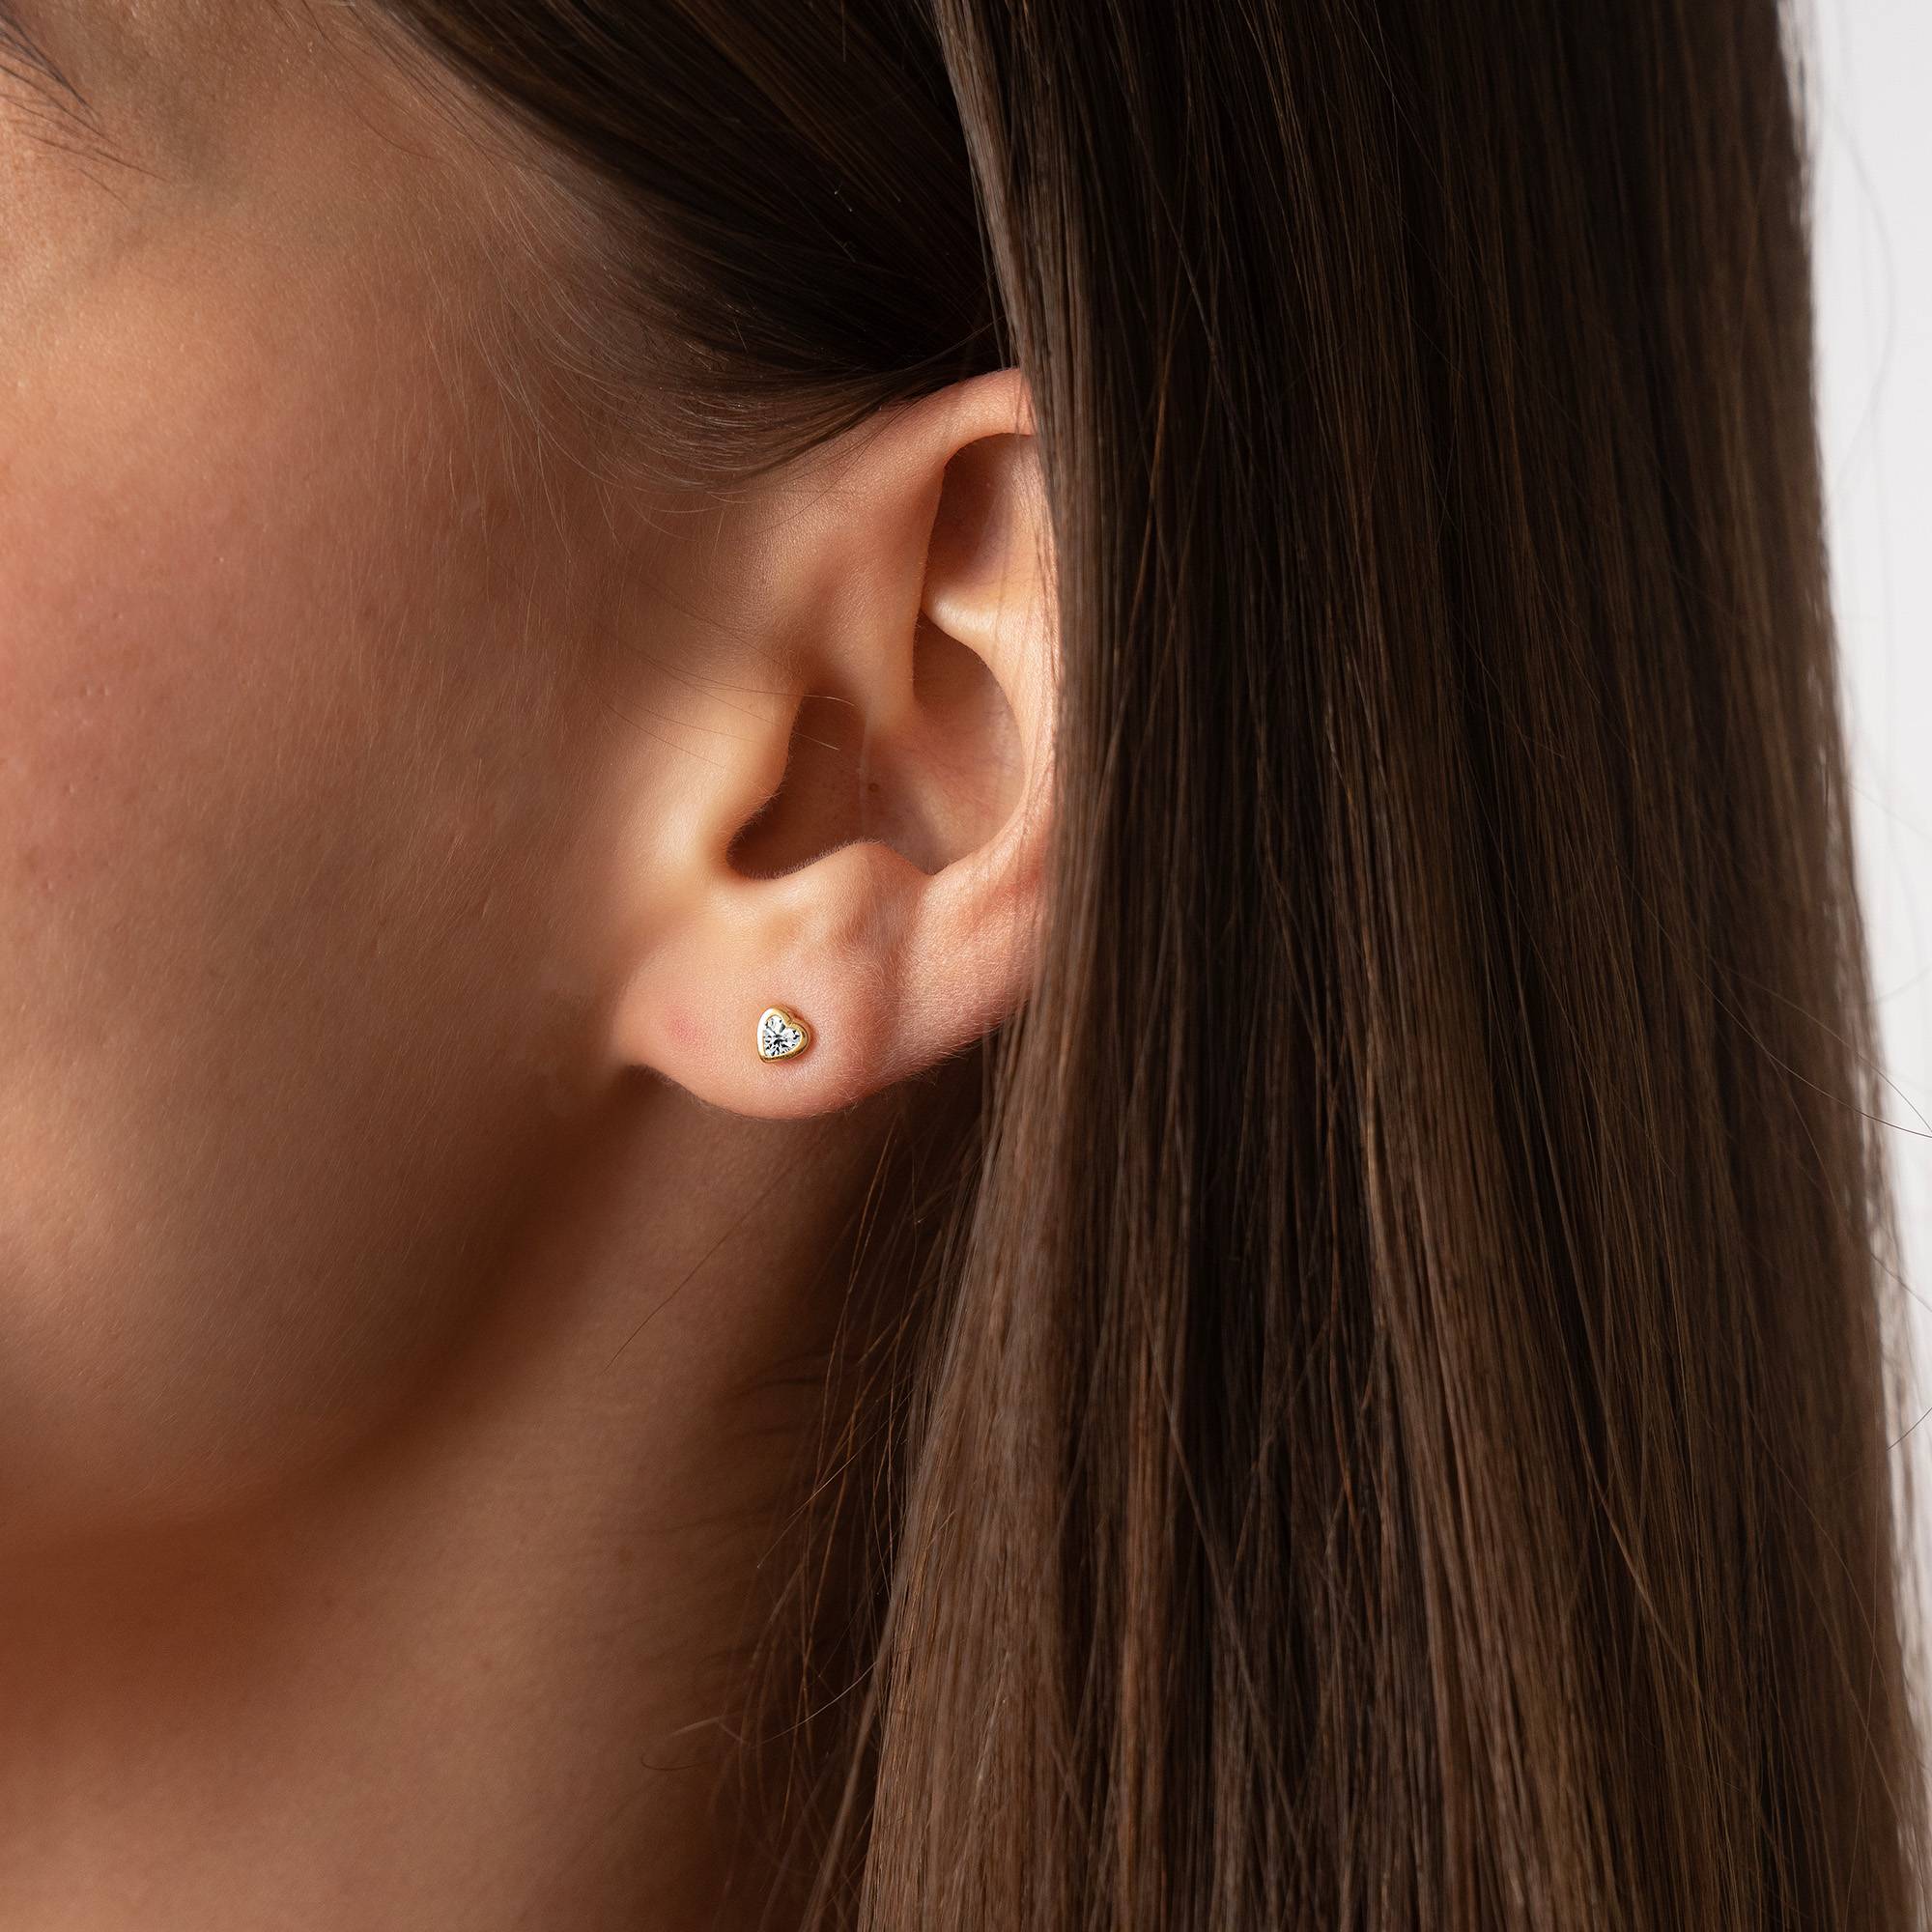 Charli Heart Earrings in 18K Gold Vermeil-6 product photo